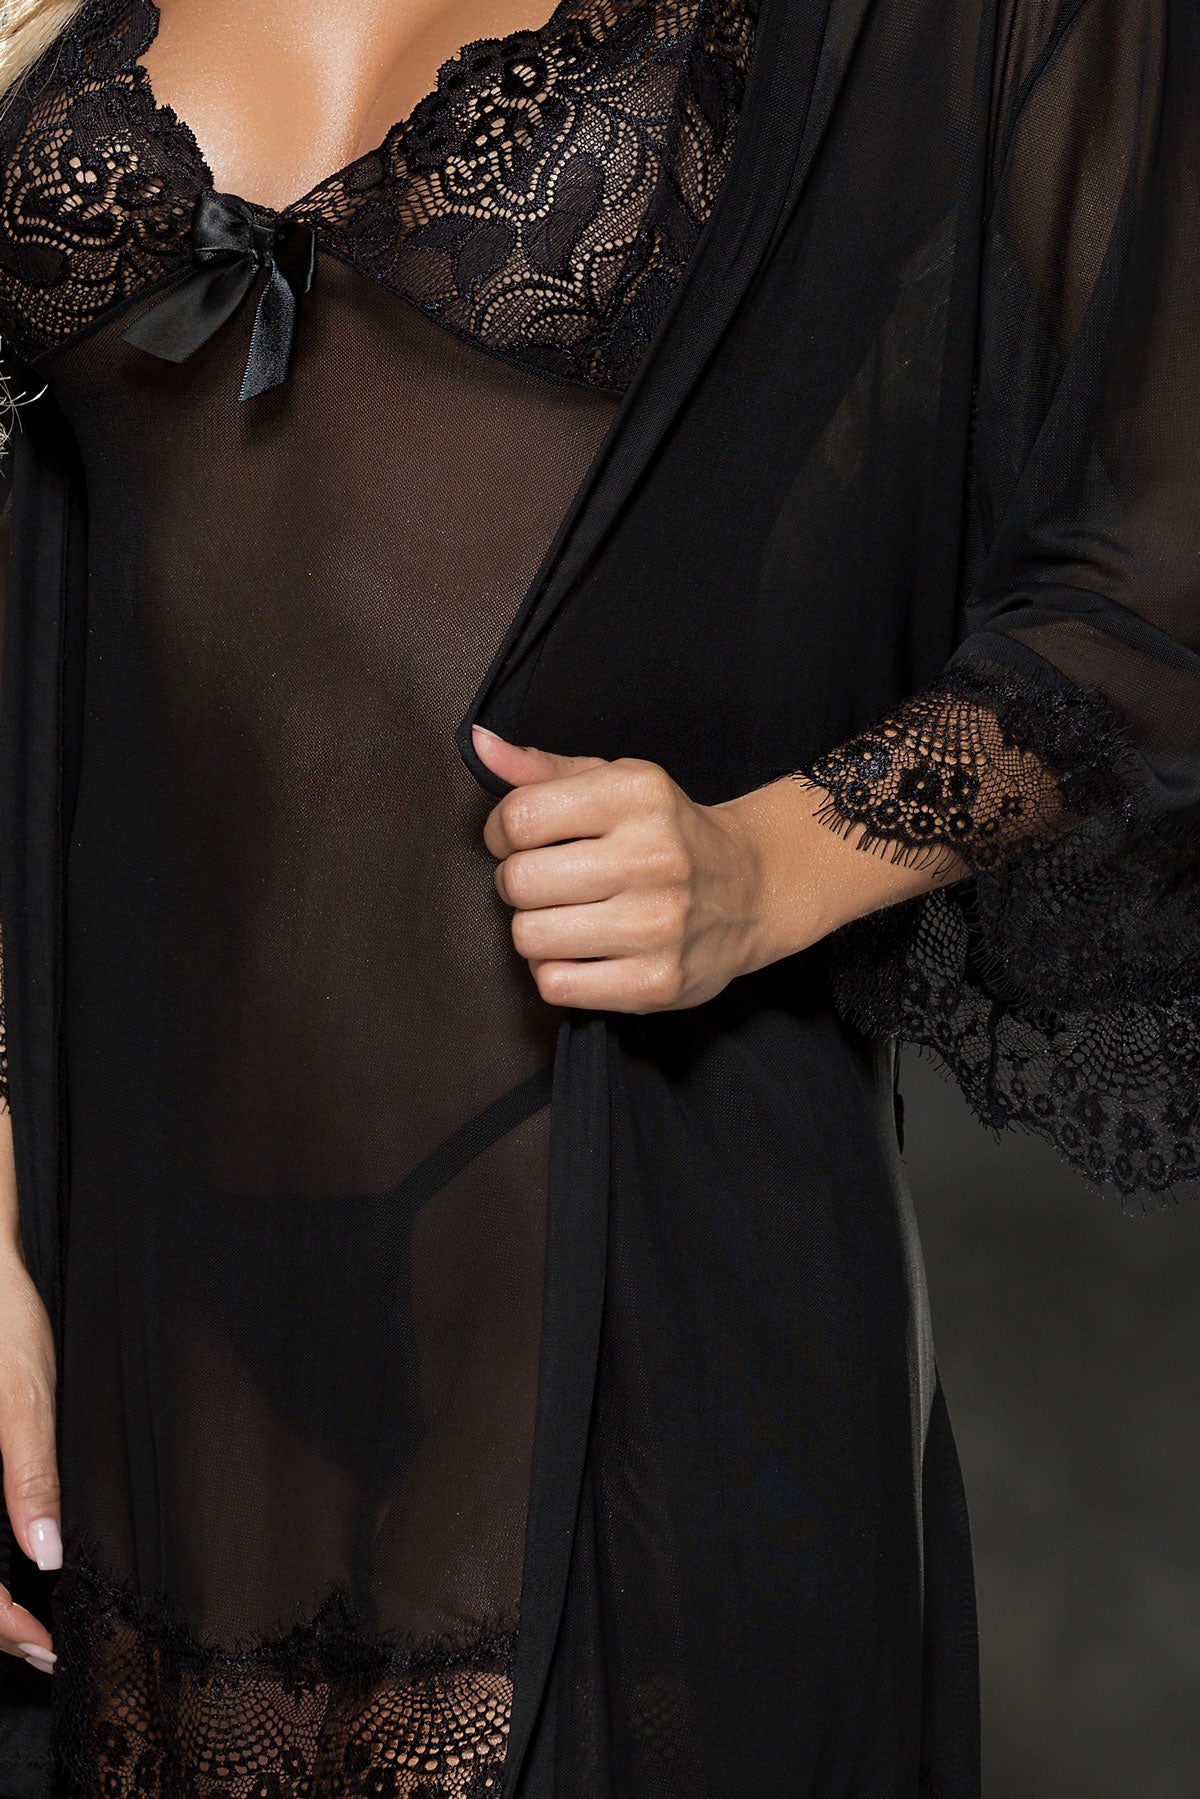 Lingerie of the Week: Dita Von Teese 'The Lamarr' Sheer Dot Robe